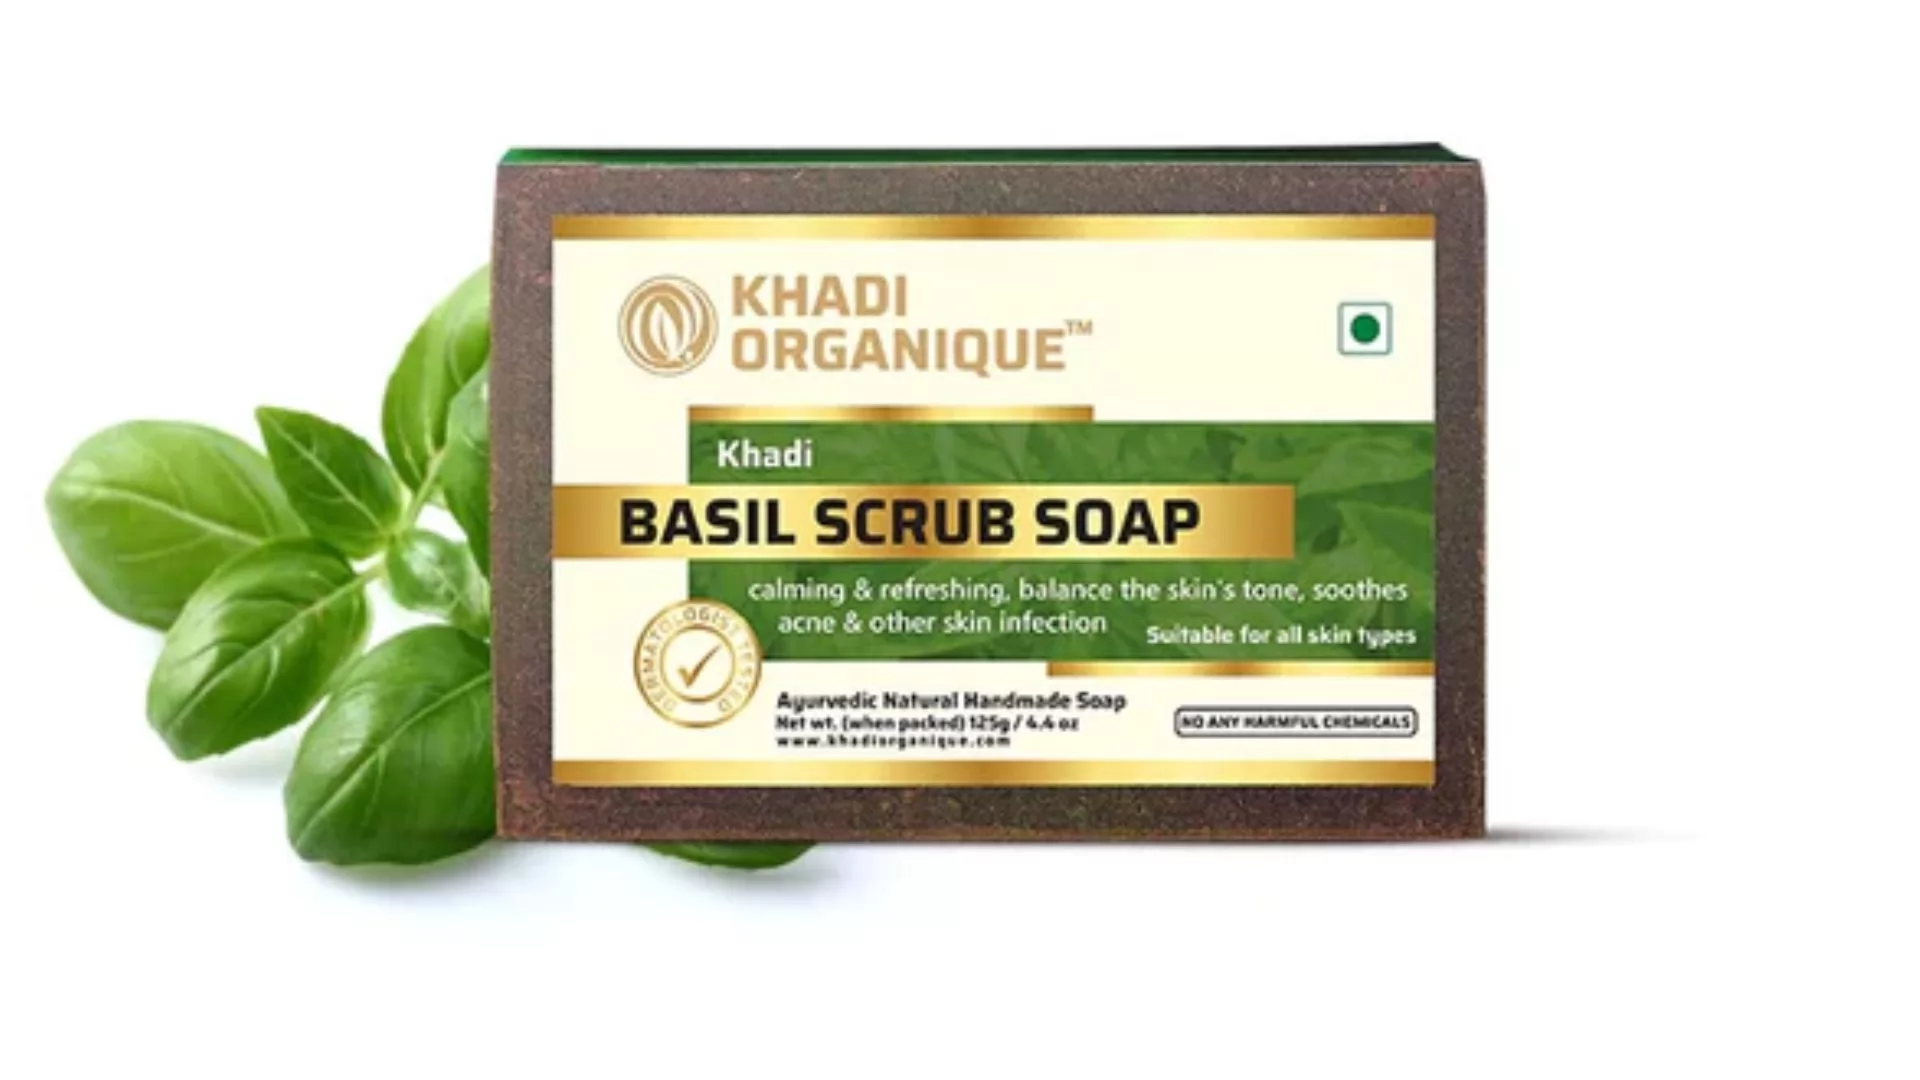  Khadi Organique Basil Scrub Soap